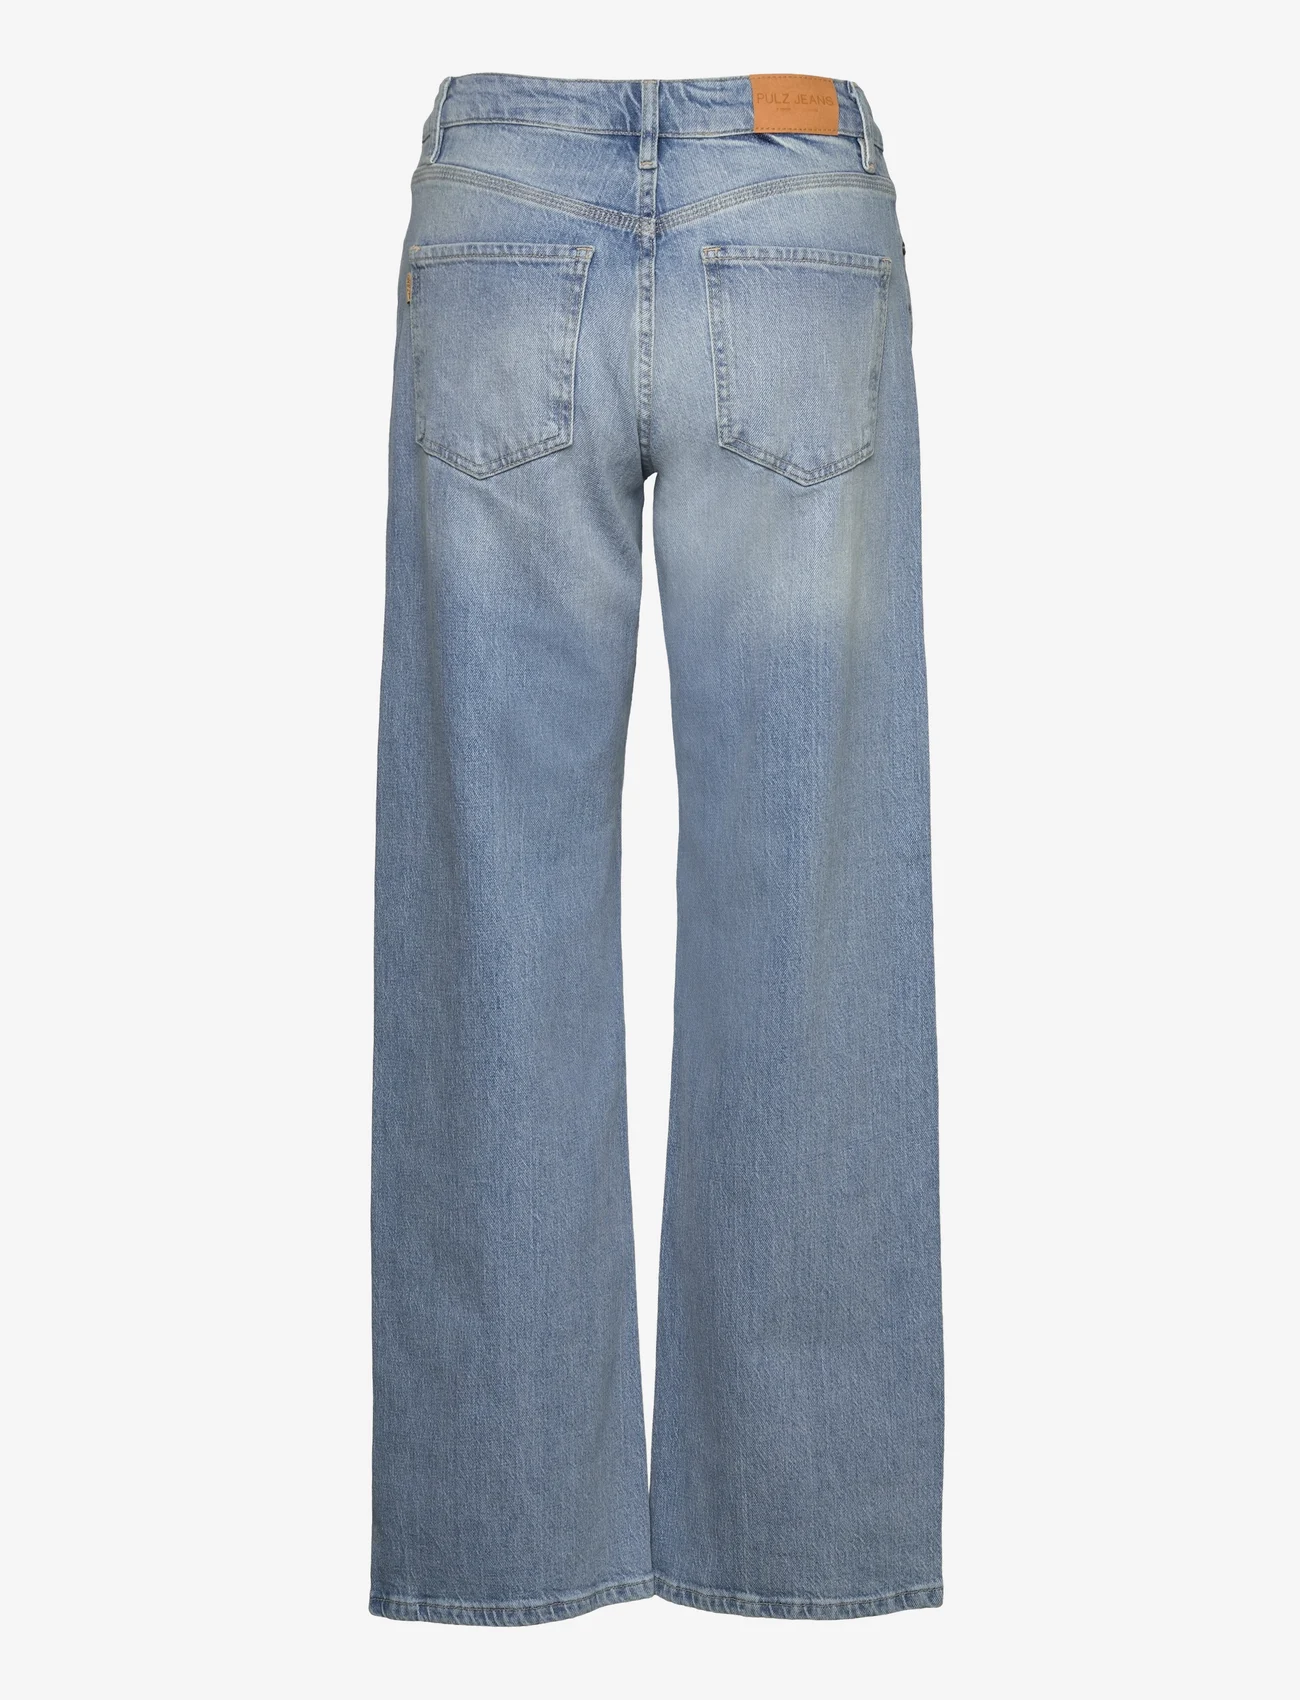 Pulz Jeans - PZVEGA HW Jeans Wide Leg - vide jeans - light blue denim - 1